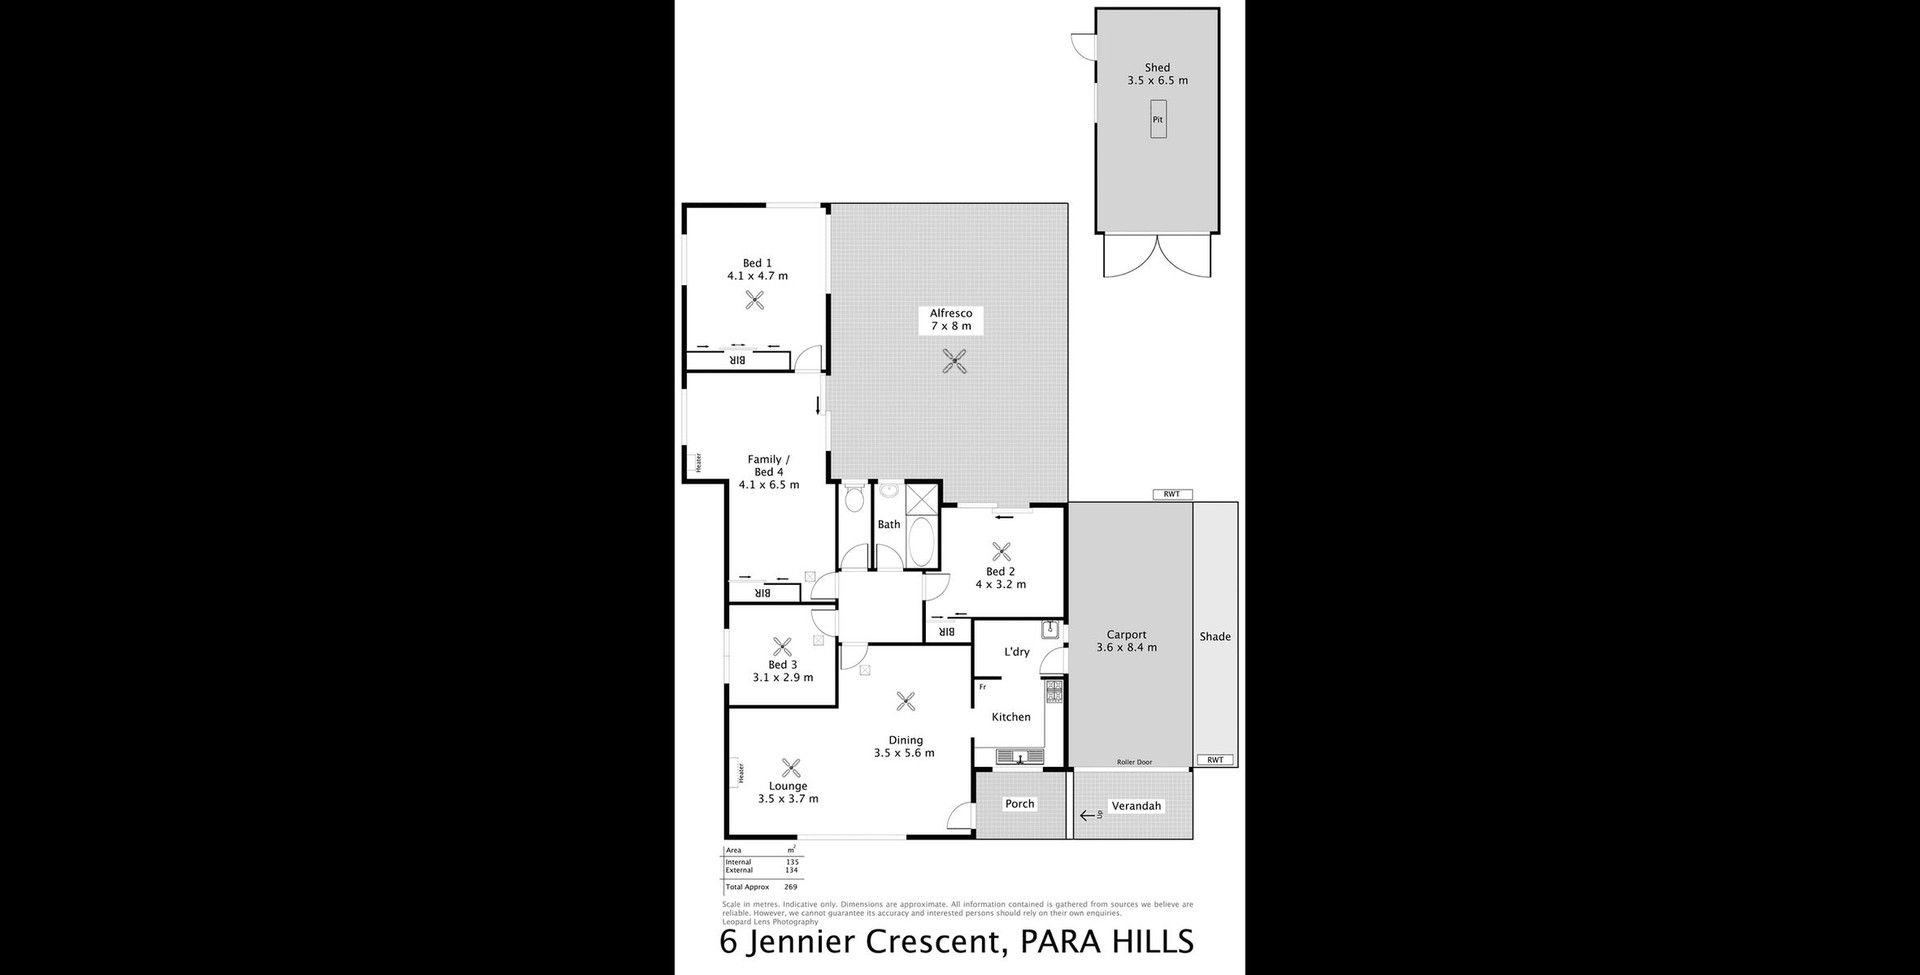 3 bedrooms House in 6 Jennier Crescent PARA HILLS SA, 5096